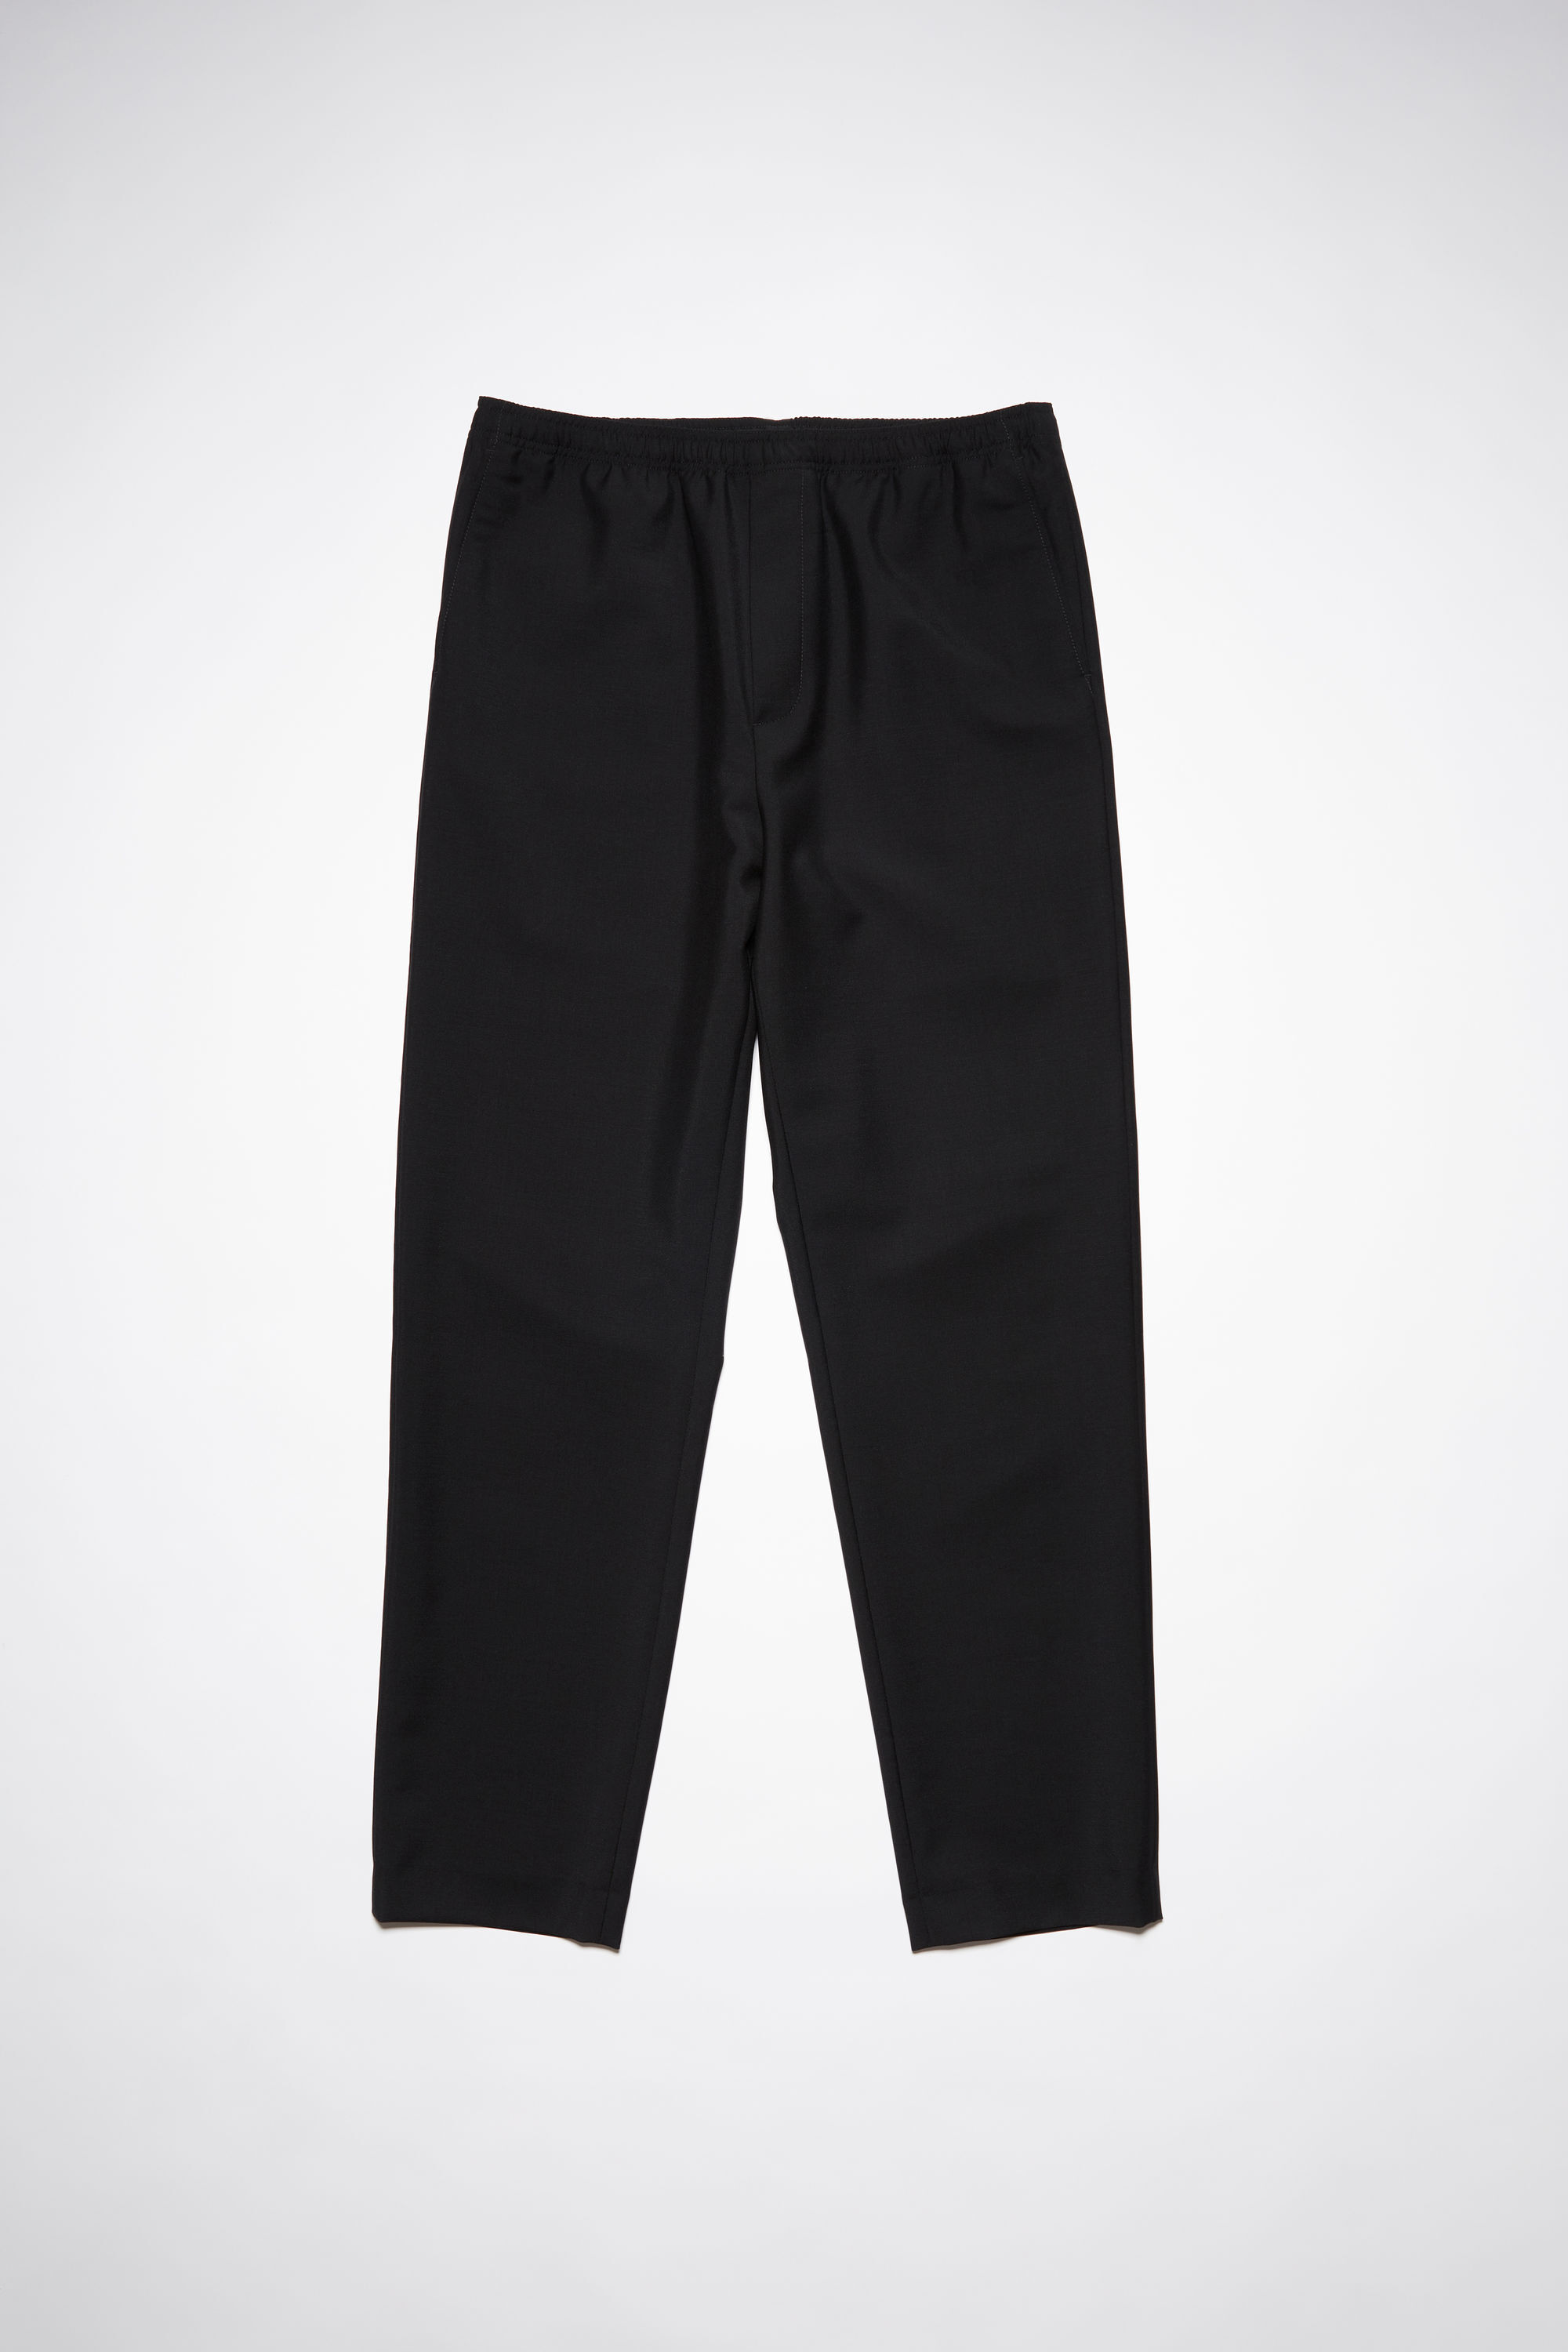 Uberstone Jack Slim Black Trousers – Mens Suit Warehouse - Melbourne